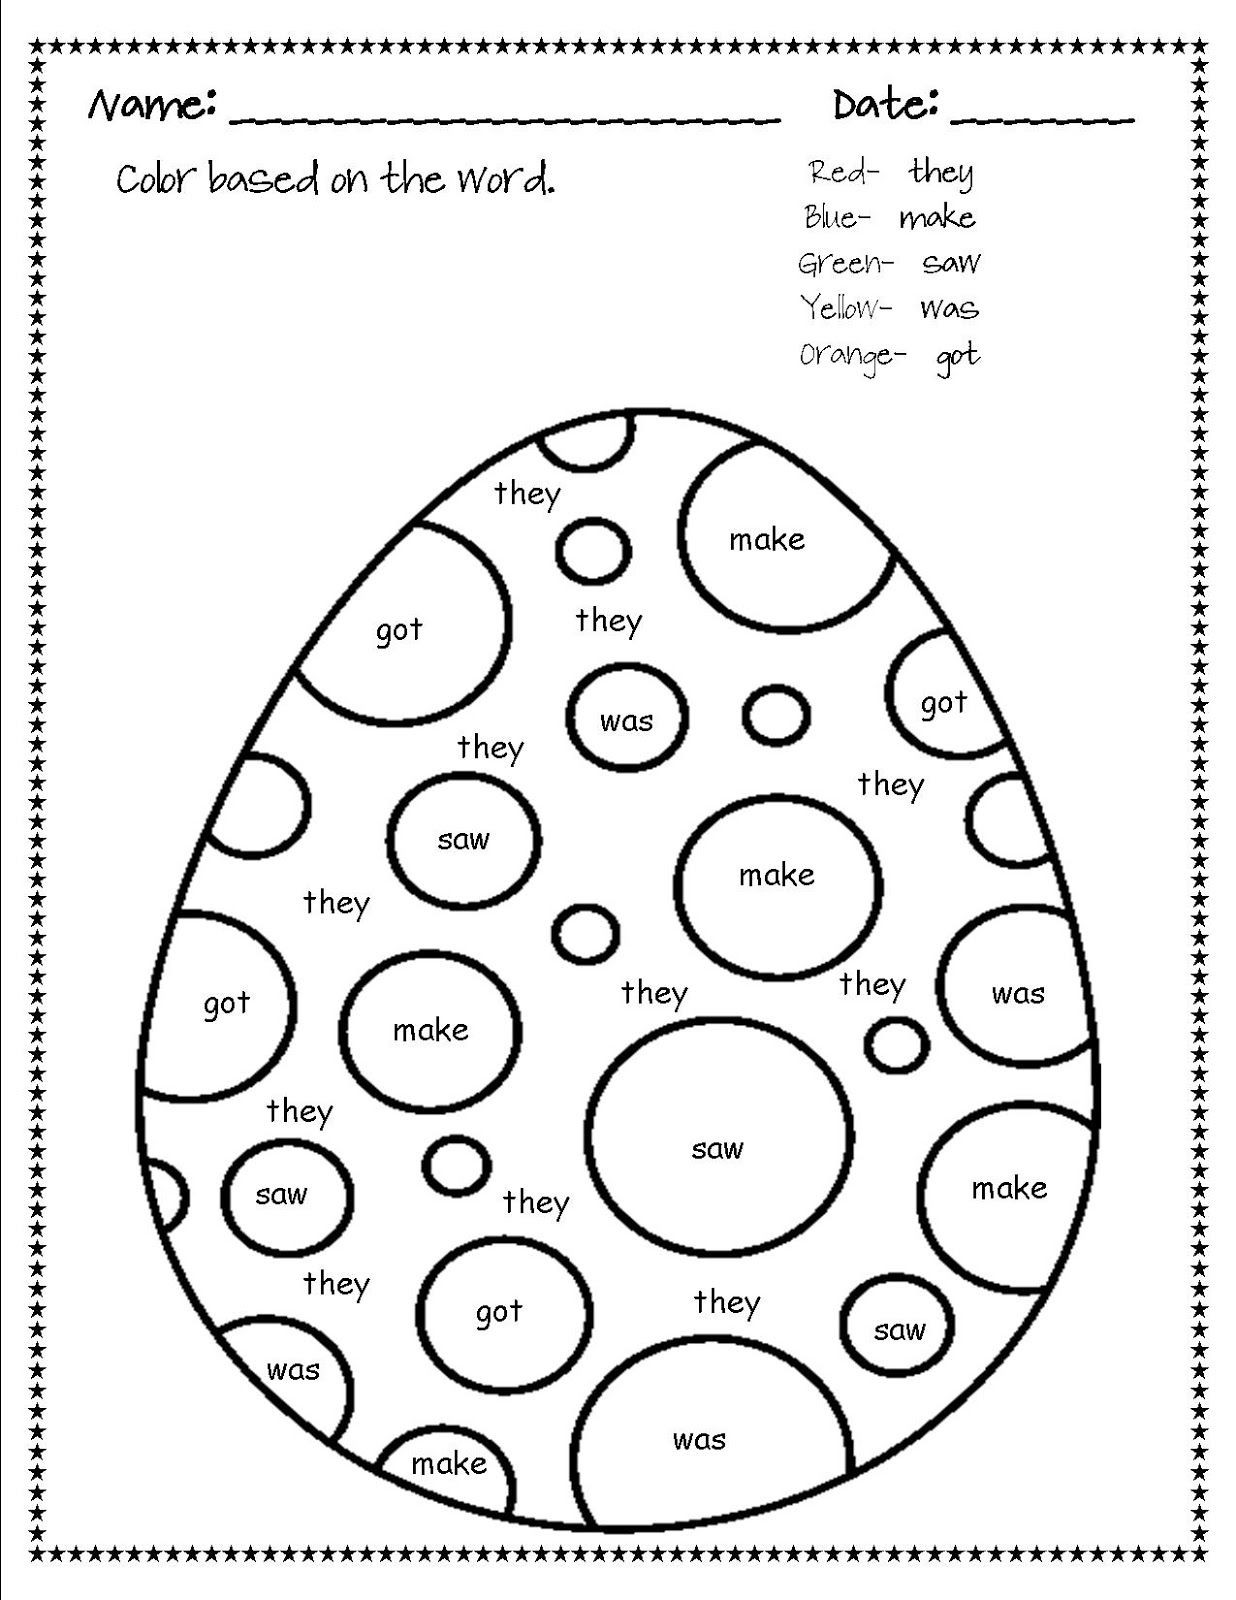 Main Idea Worksheet 4th Grade Identifying Main Idea Worksheets Kindergarten Printable 4th